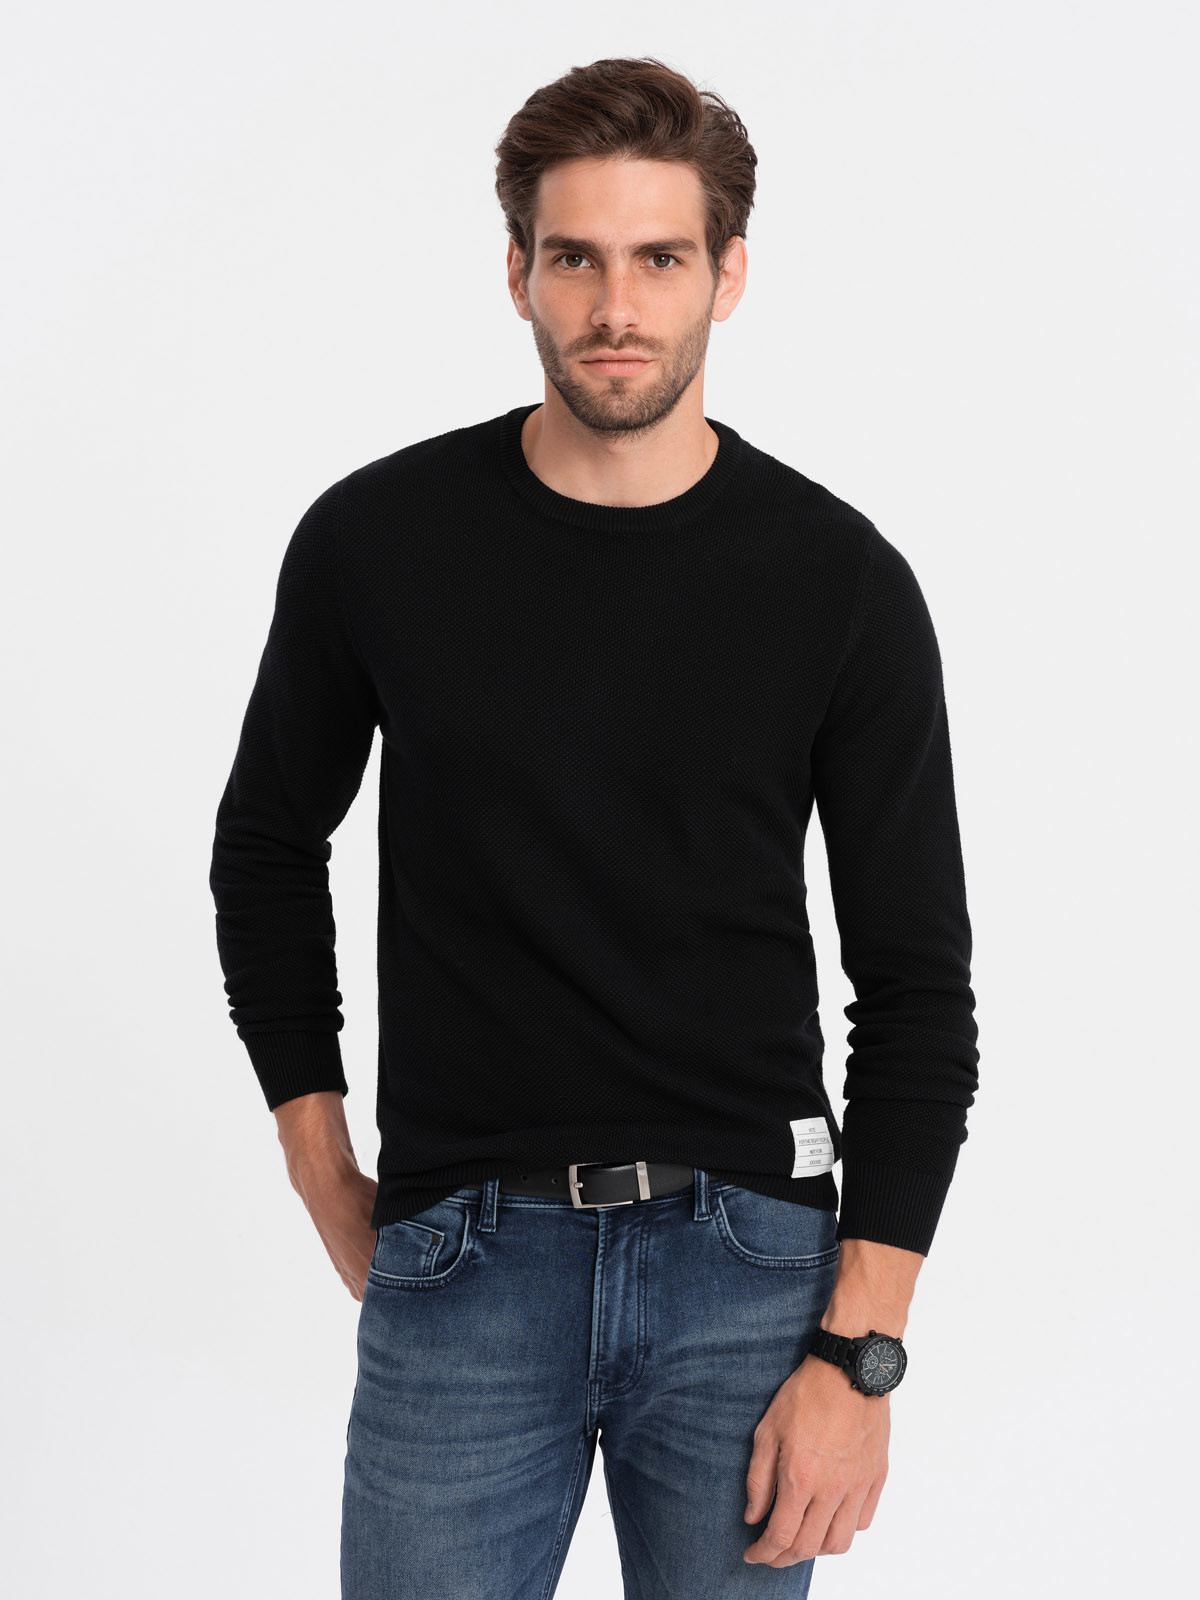 Men's textured sweater with half round neckline - black V4 OM-SWSW V4 OM-SWSW - 0104